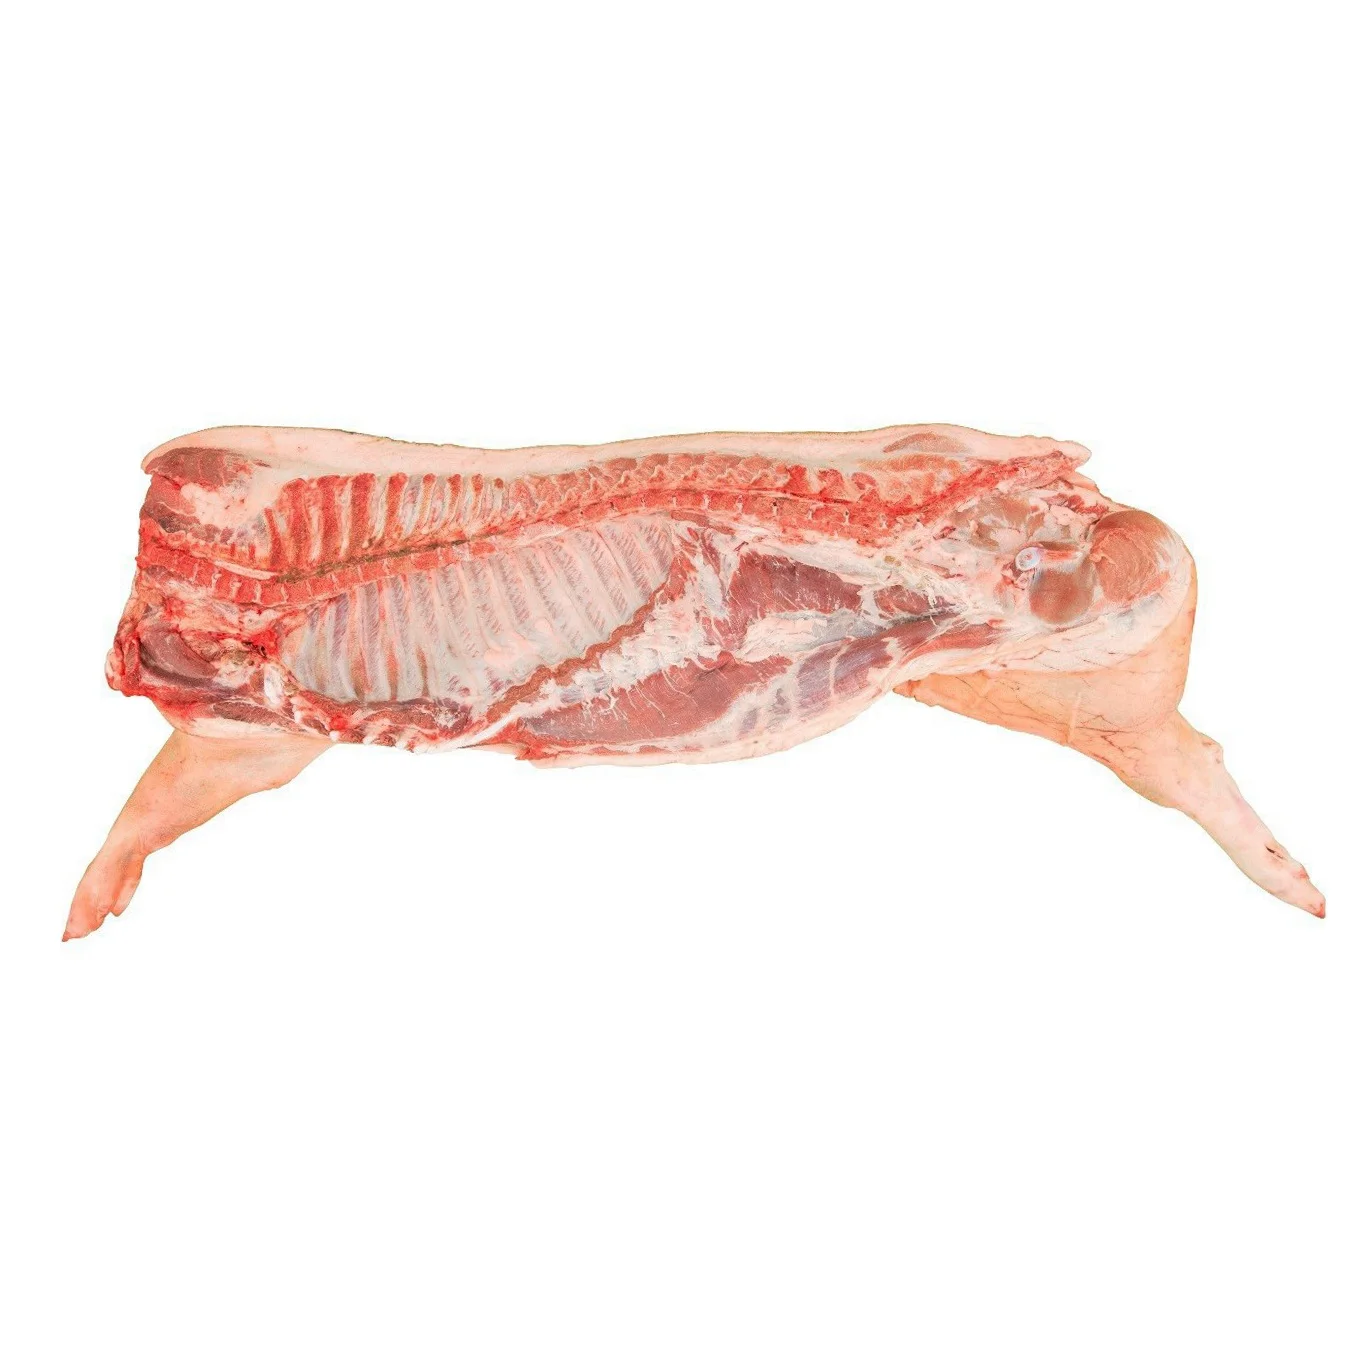 Frozen Whole Pork Carcass Sale Price